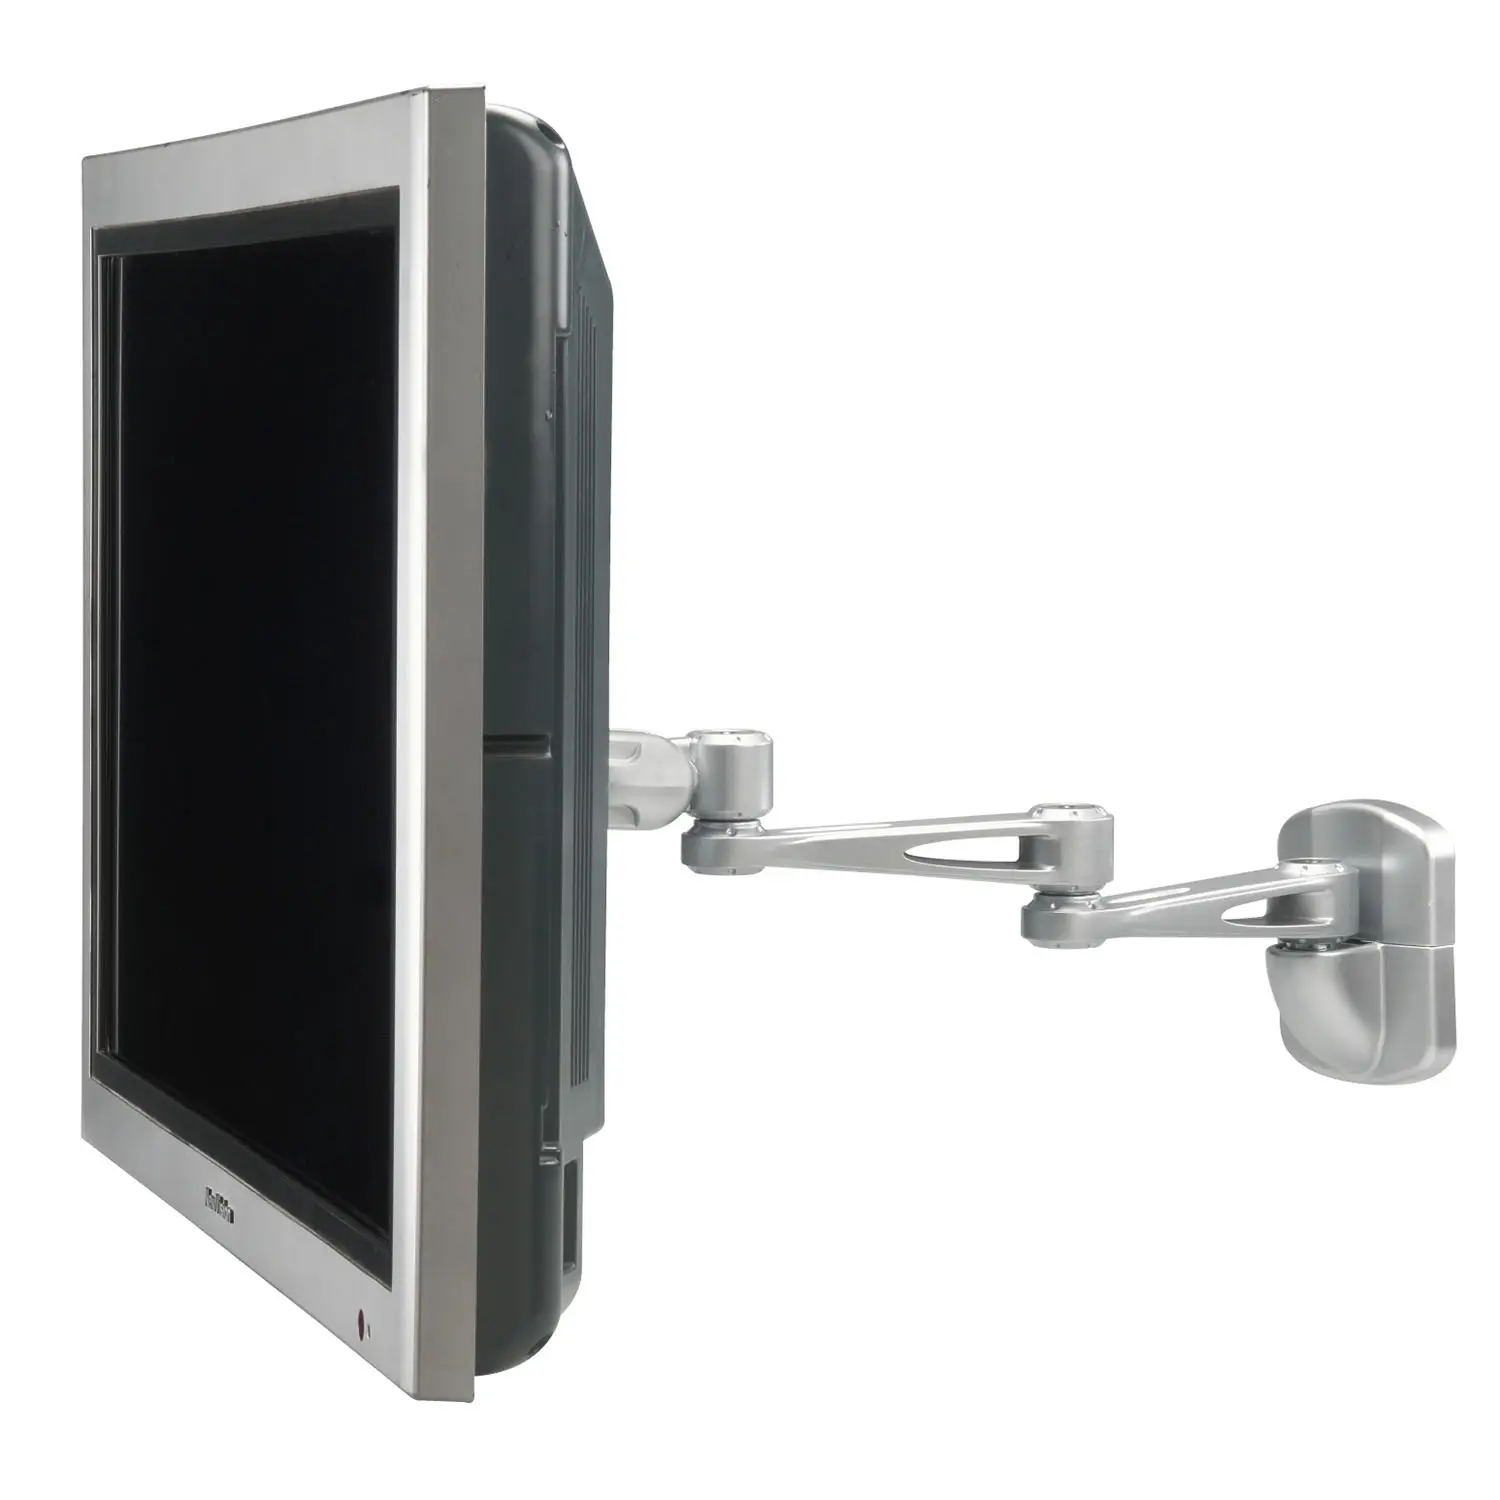 LCD TV 모니터 스윙 암 마운트 스탠드 모니터를 벽에 대고 15 도 아래로 기울어 회전 가능